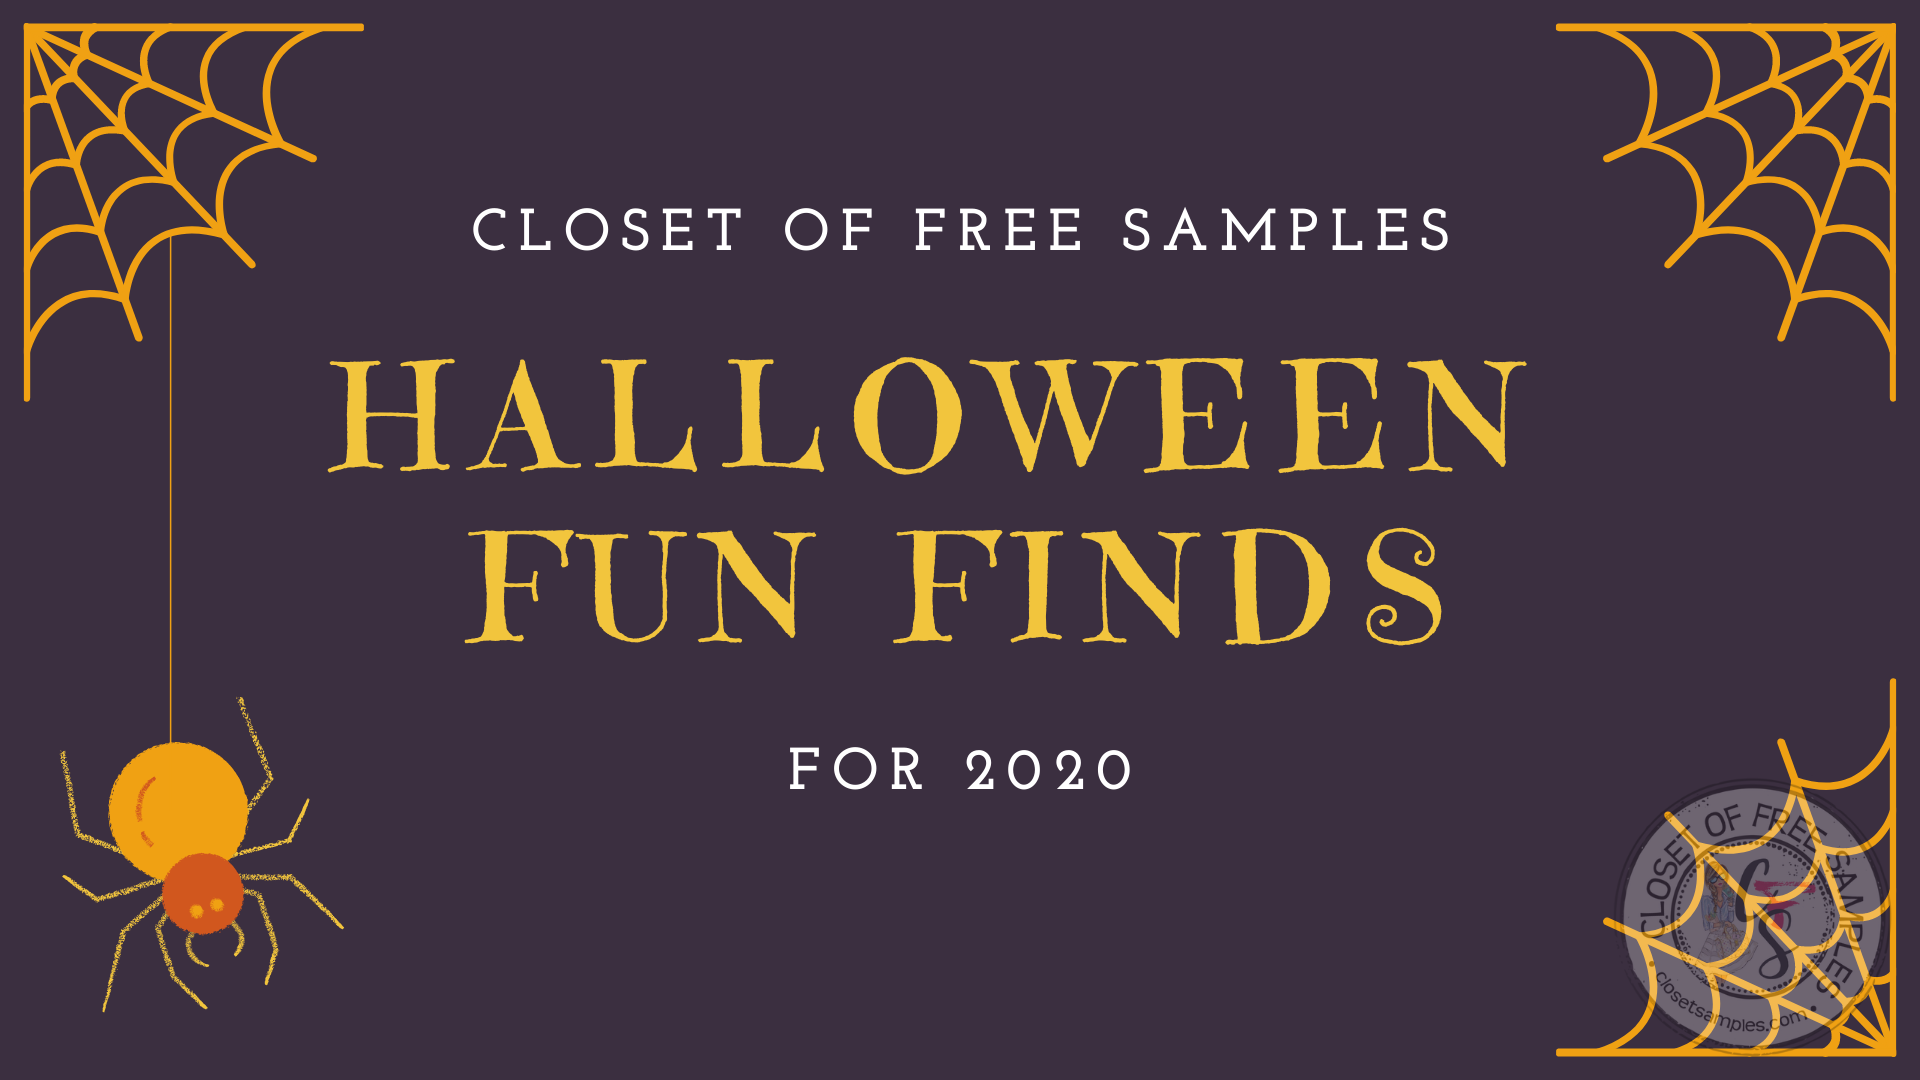 Closet-of-Free-Samples-2020-Halloween-Fun-Finds.png